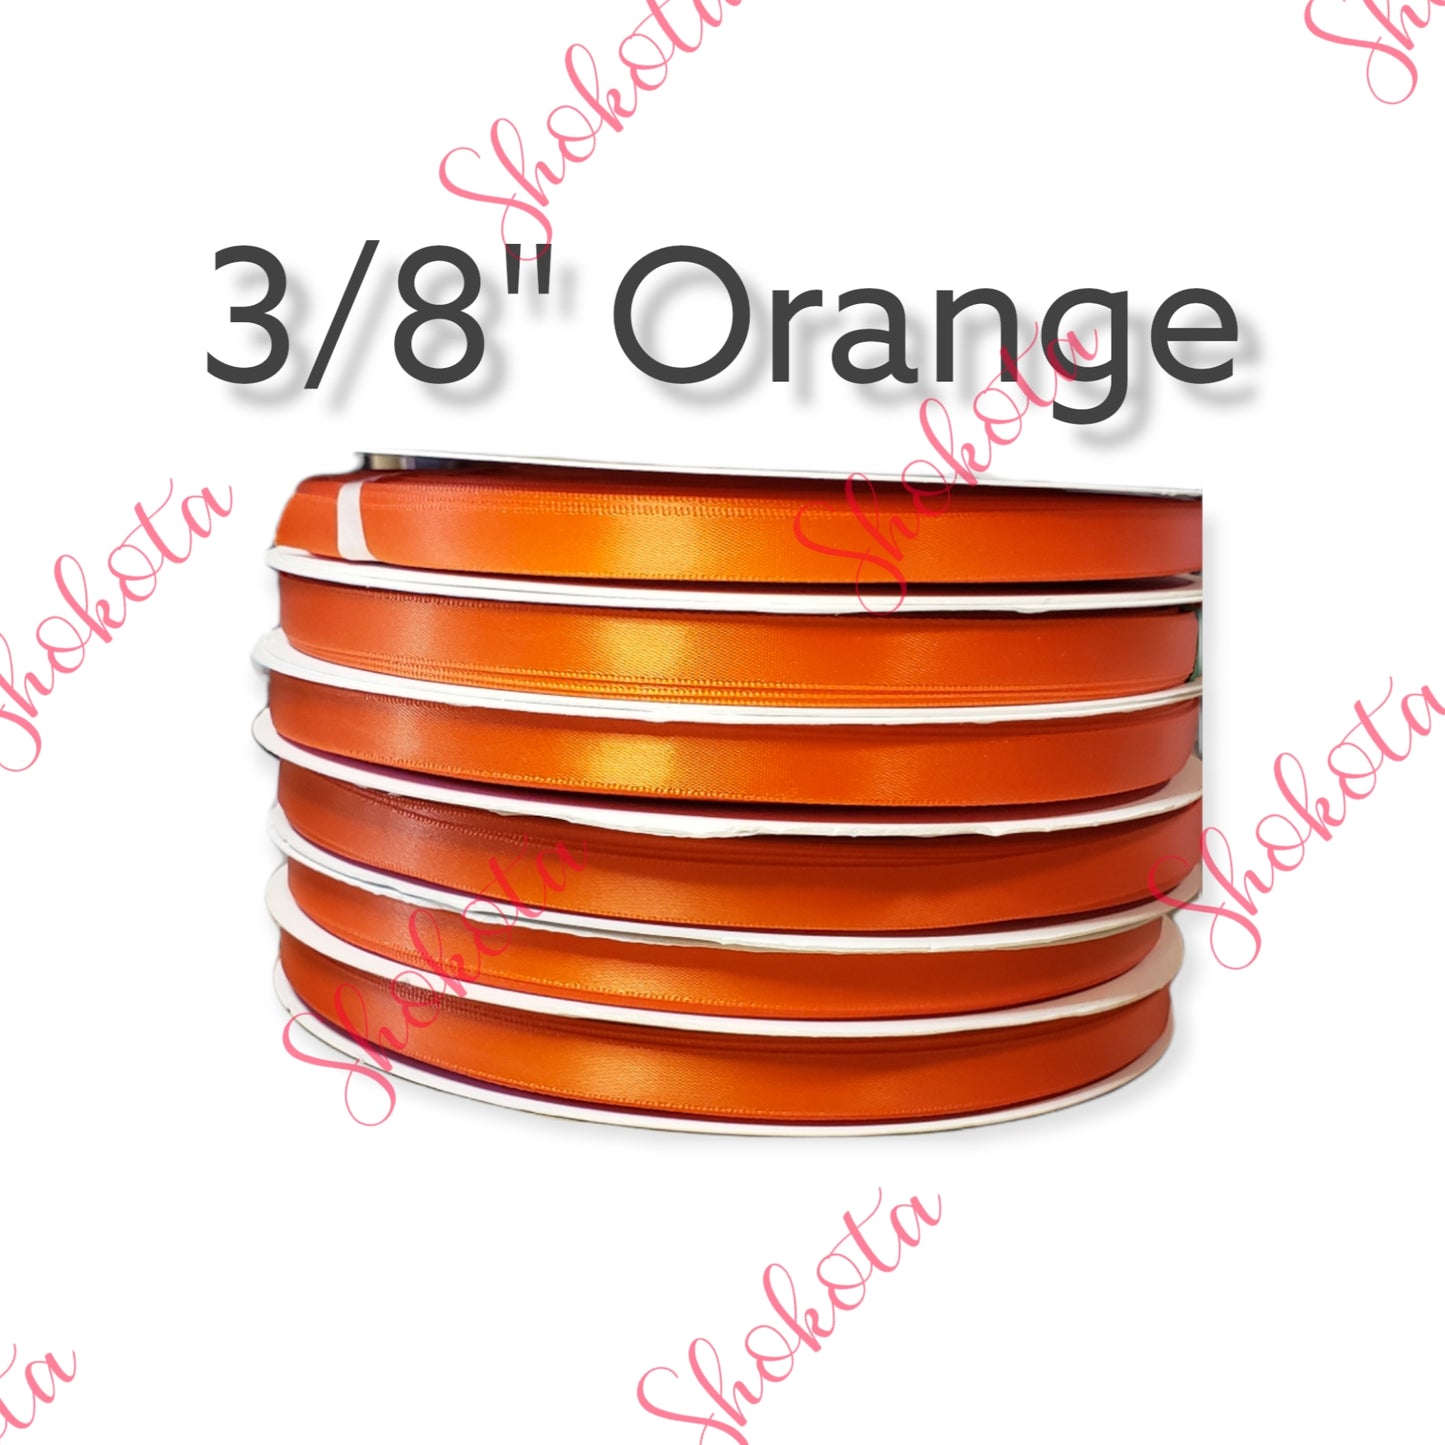 3/8" Orange Satin Ribbon